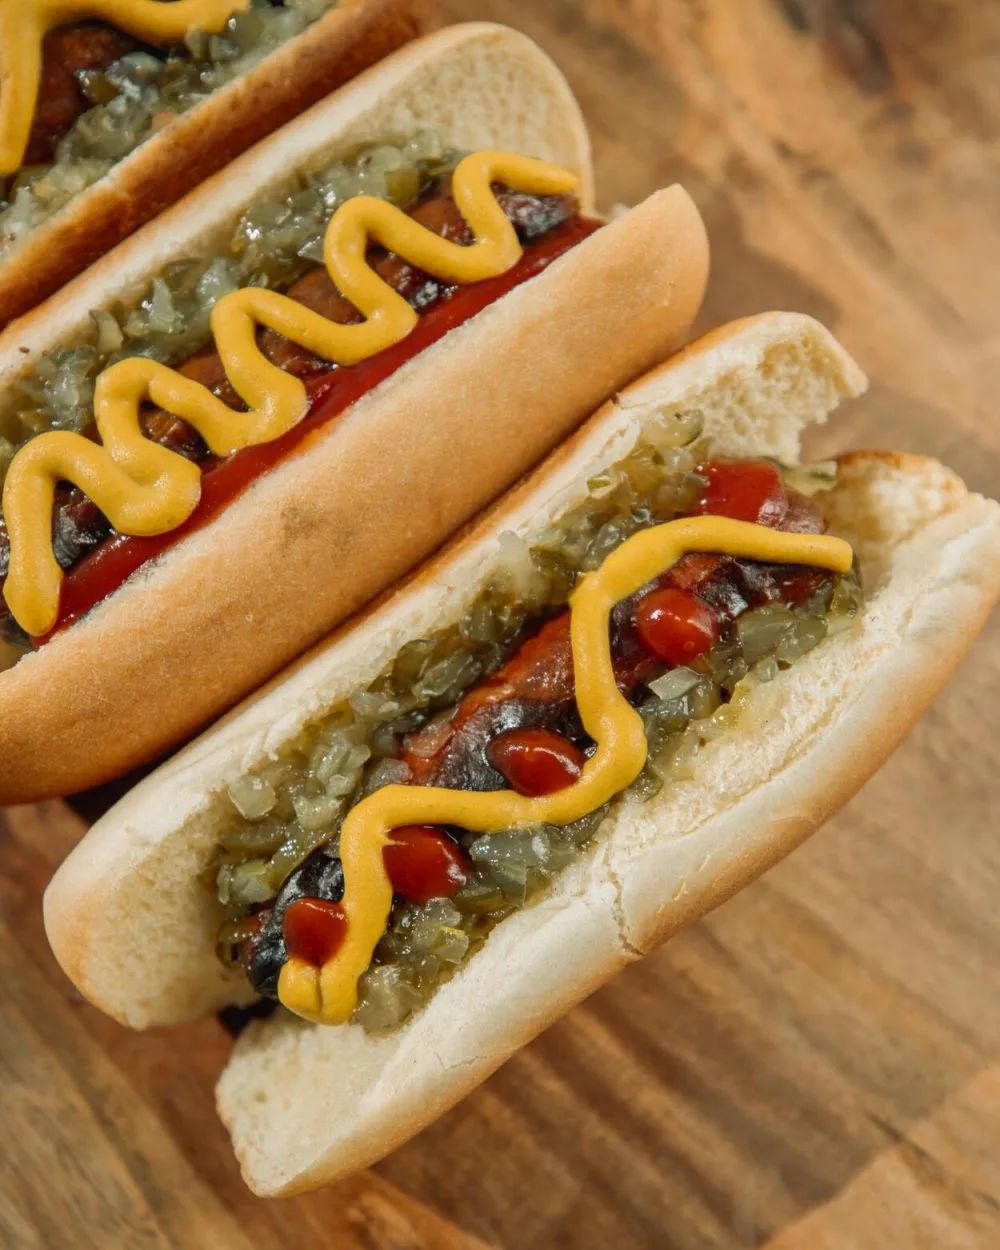  Costco Regular Hotdog Vs. A polish Hotdog (The Differences) - All The Differences